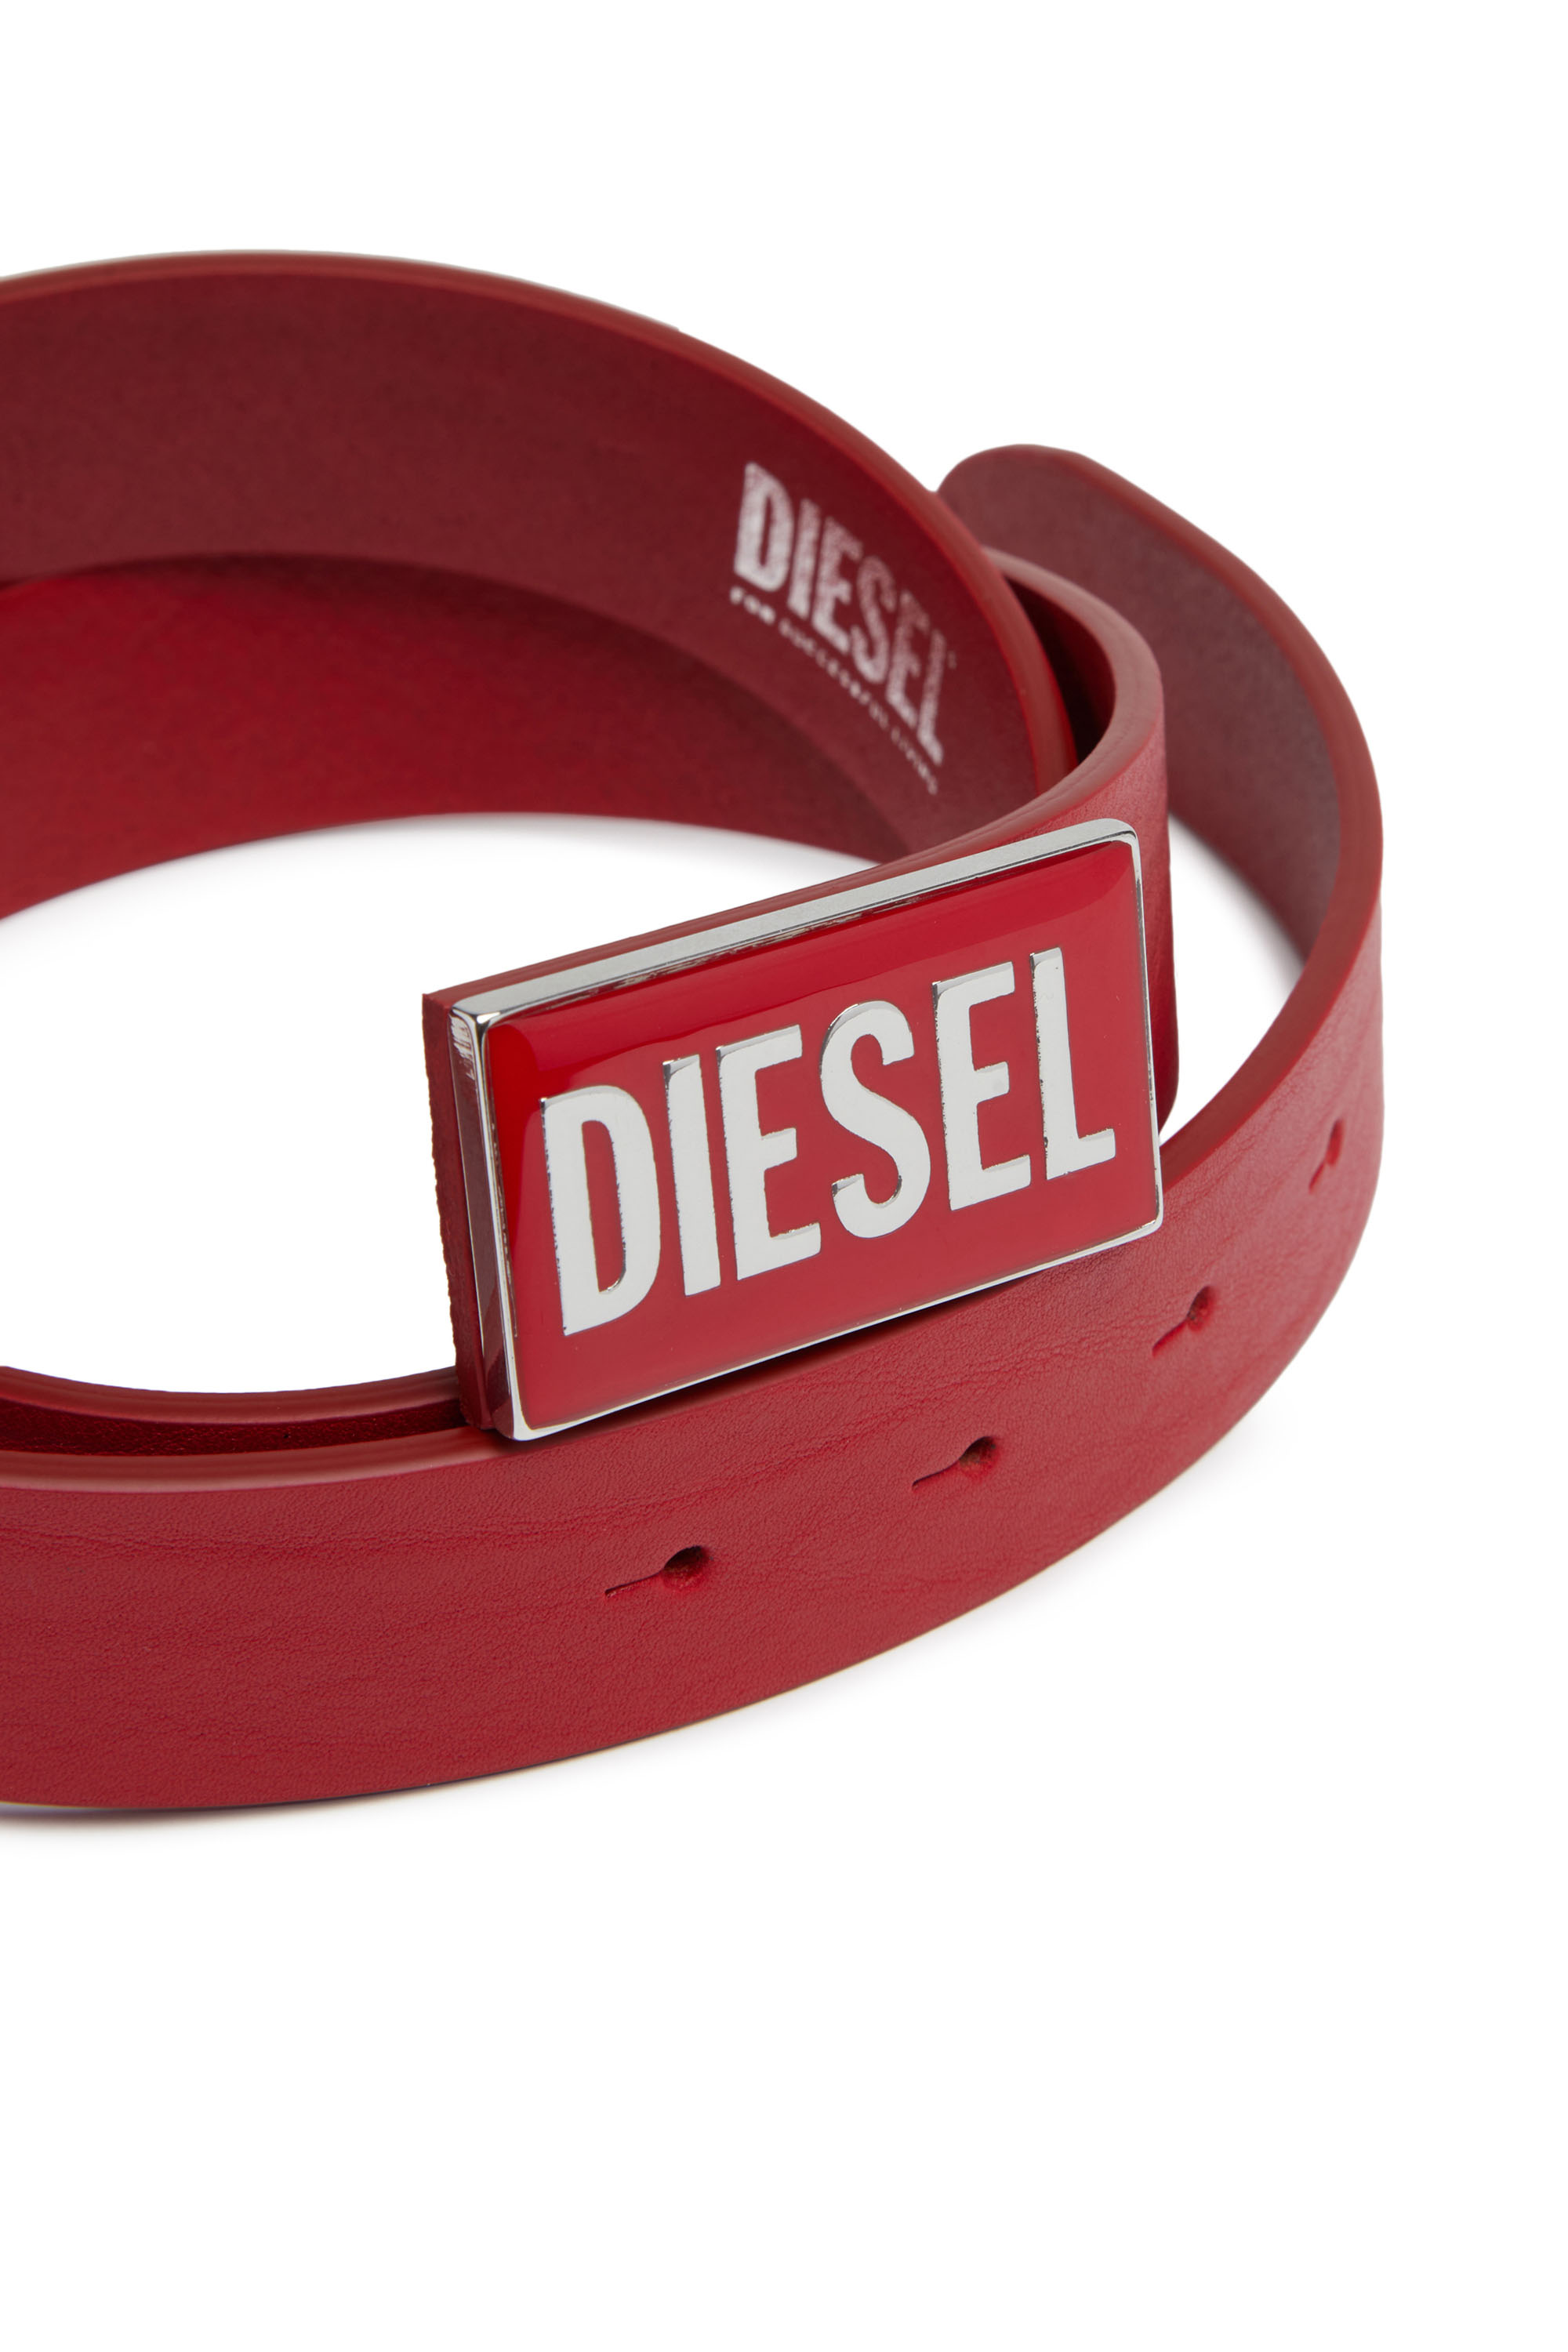 Diesel - B-GLOSSY, Rot - Image 3